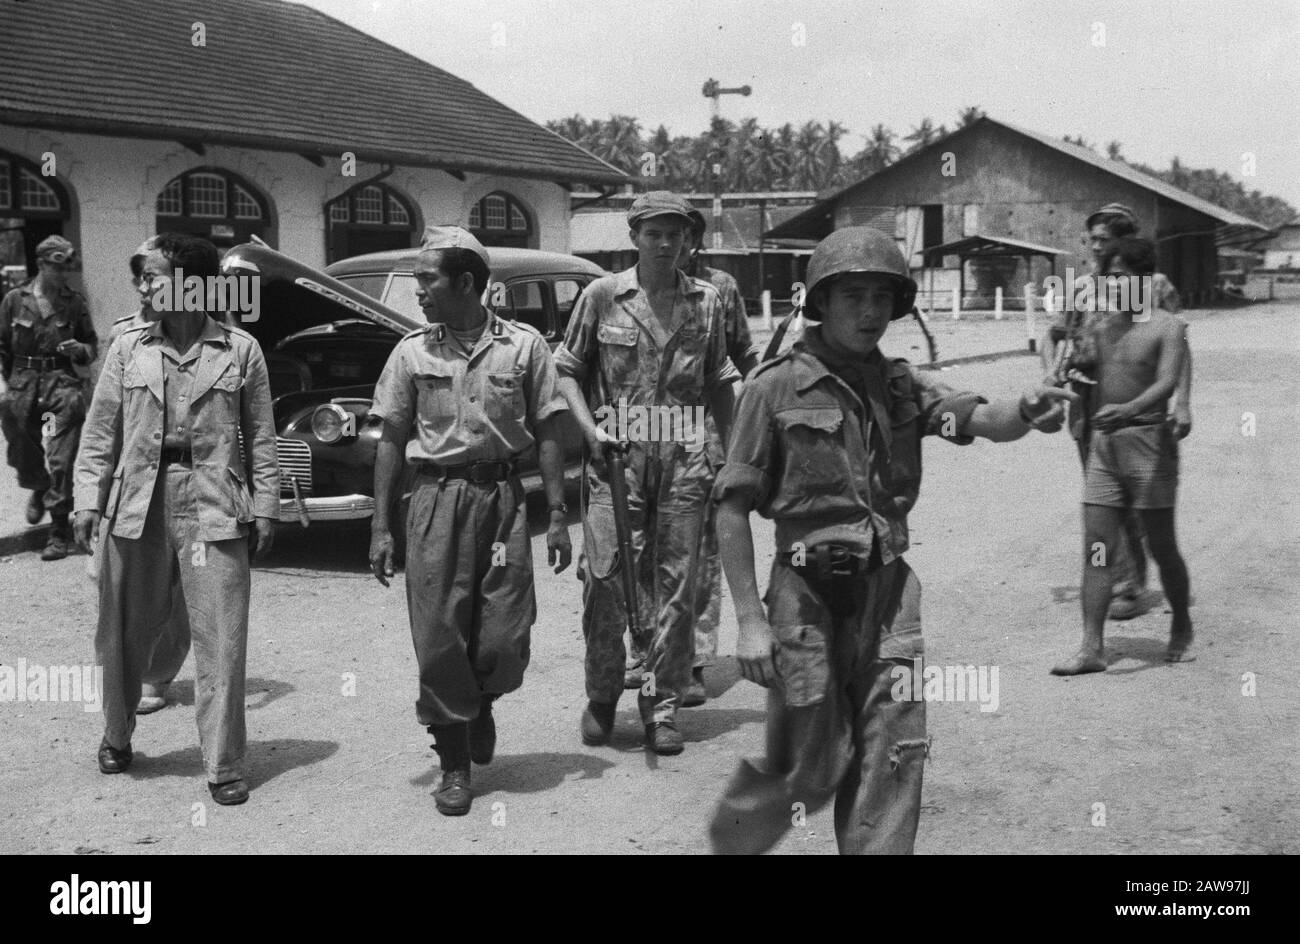 Loeboek Pakem and Baoengan  Get Caught TNI soldiers are applied Annotation: DJK Date: July 29, 1948 Location: Indonesia, Dutch East Indies, Sumatra Stock Photo